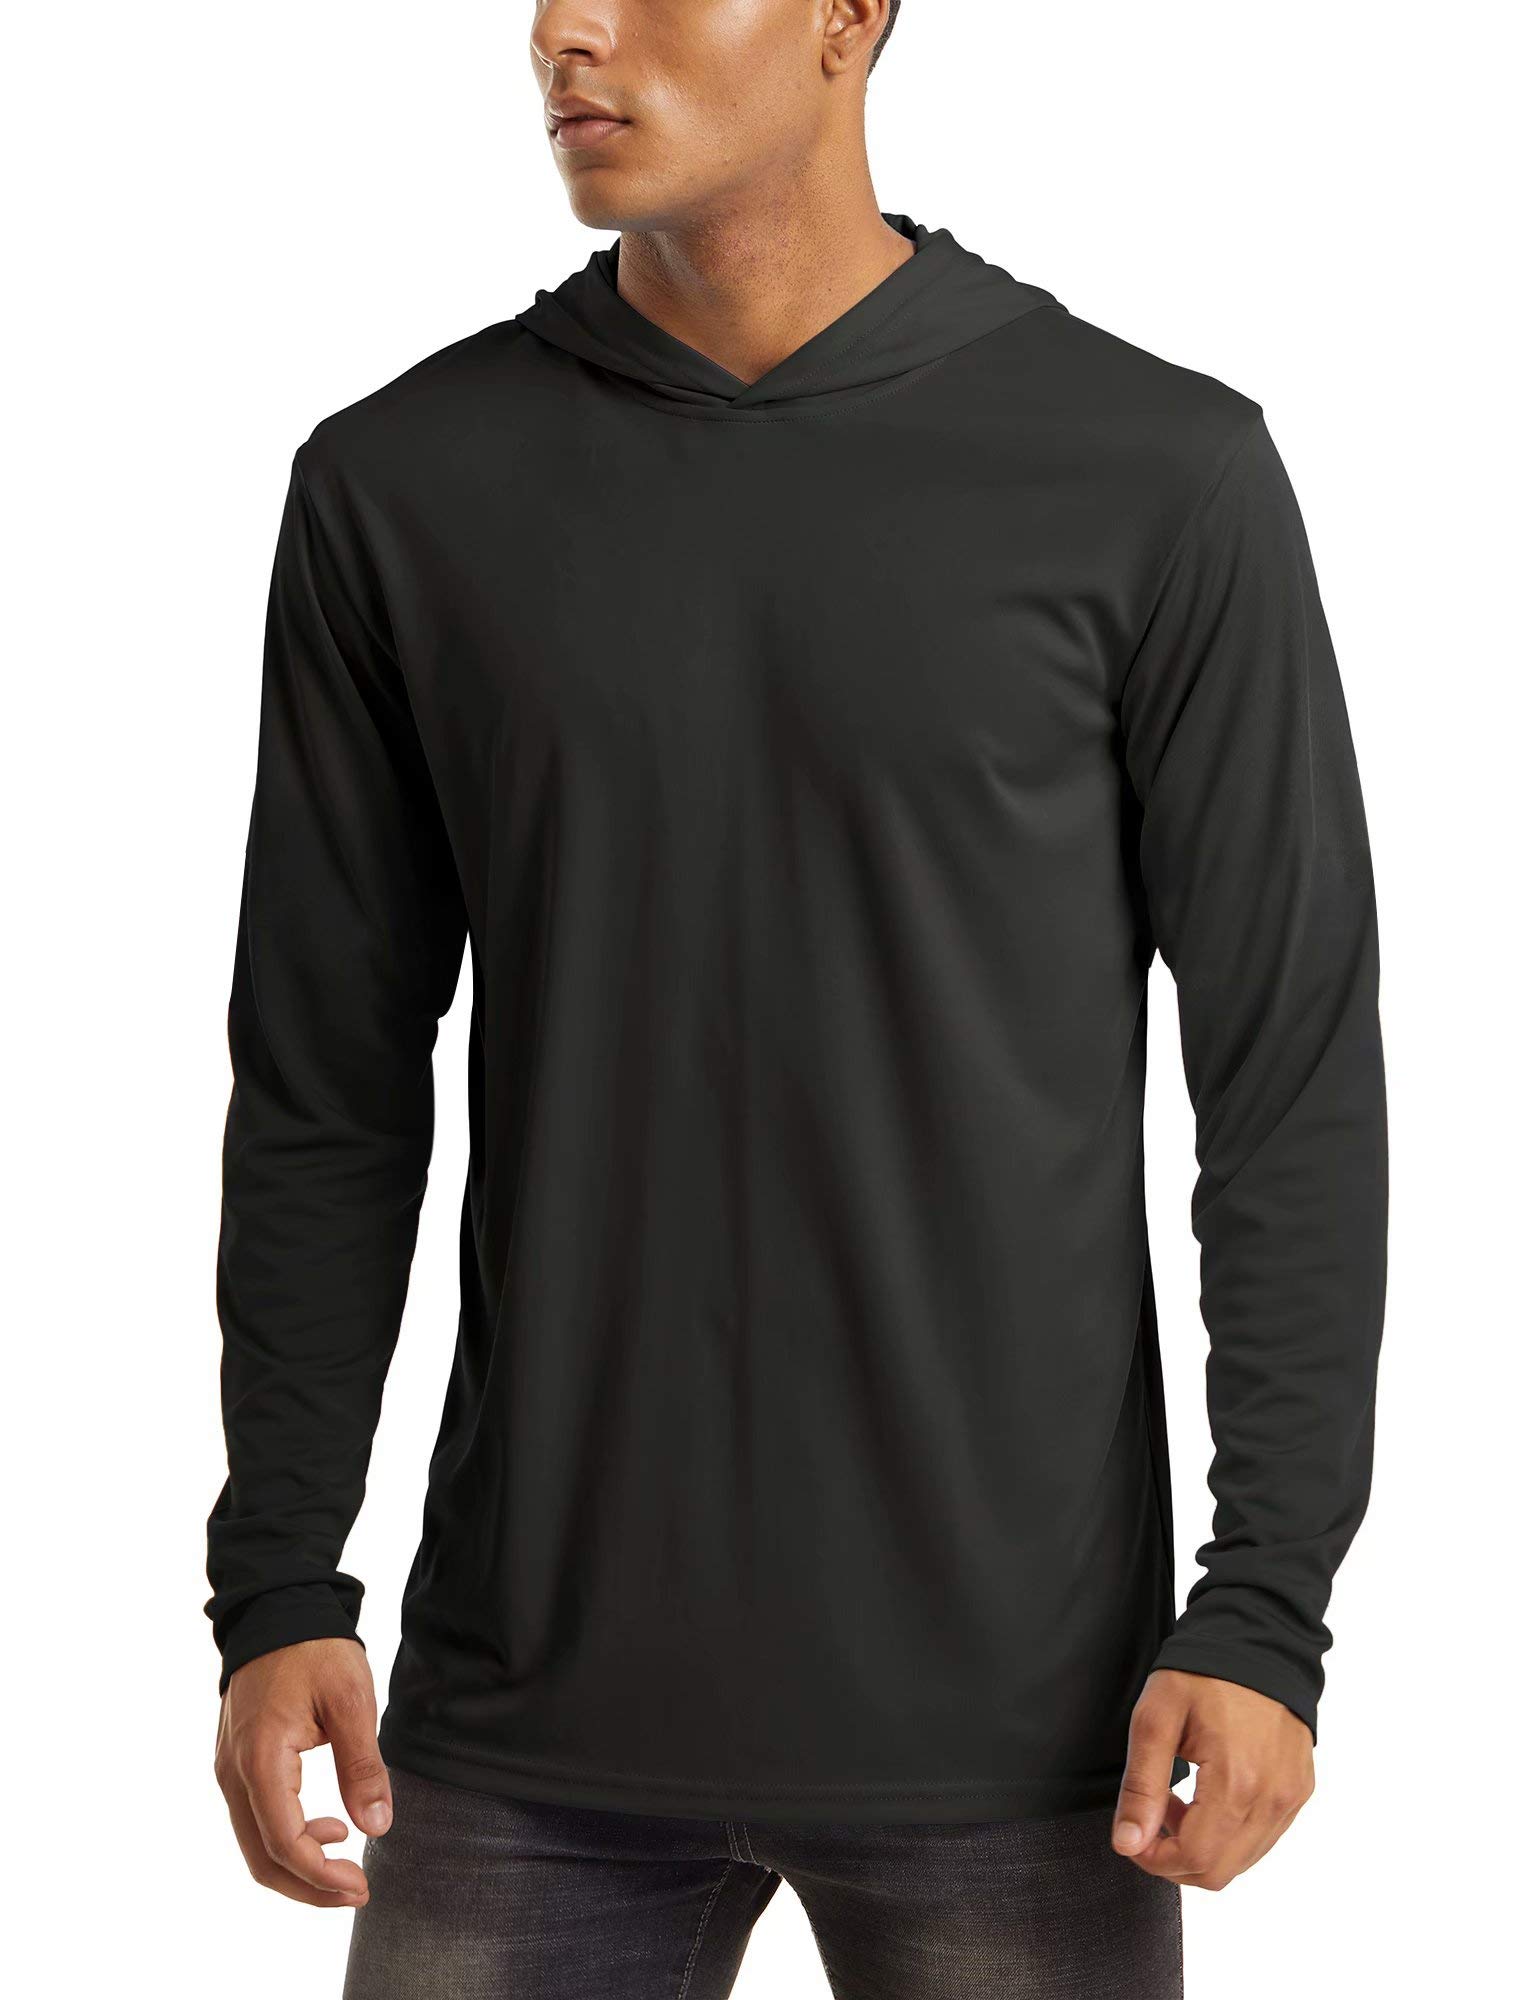 GOT Sports UPF 50+ Hooded Fishing Shirt for Men Women - Long Sleeve Hoodie  T Shirts - UV Sun Protection, Lightweight